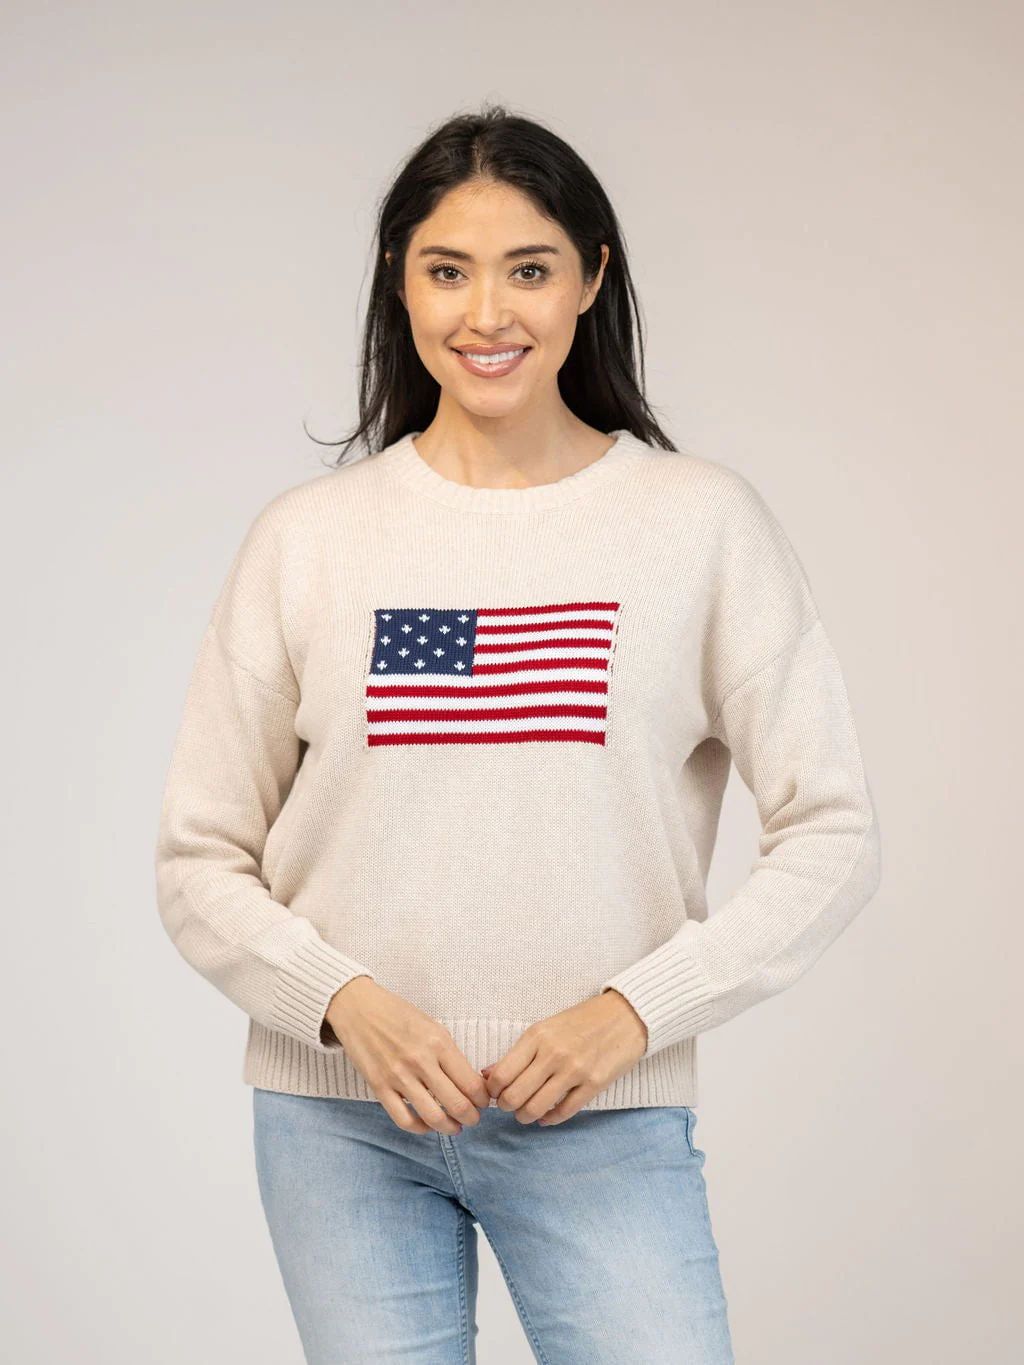 American Flag Sweater in Ivory | Beau & Ro